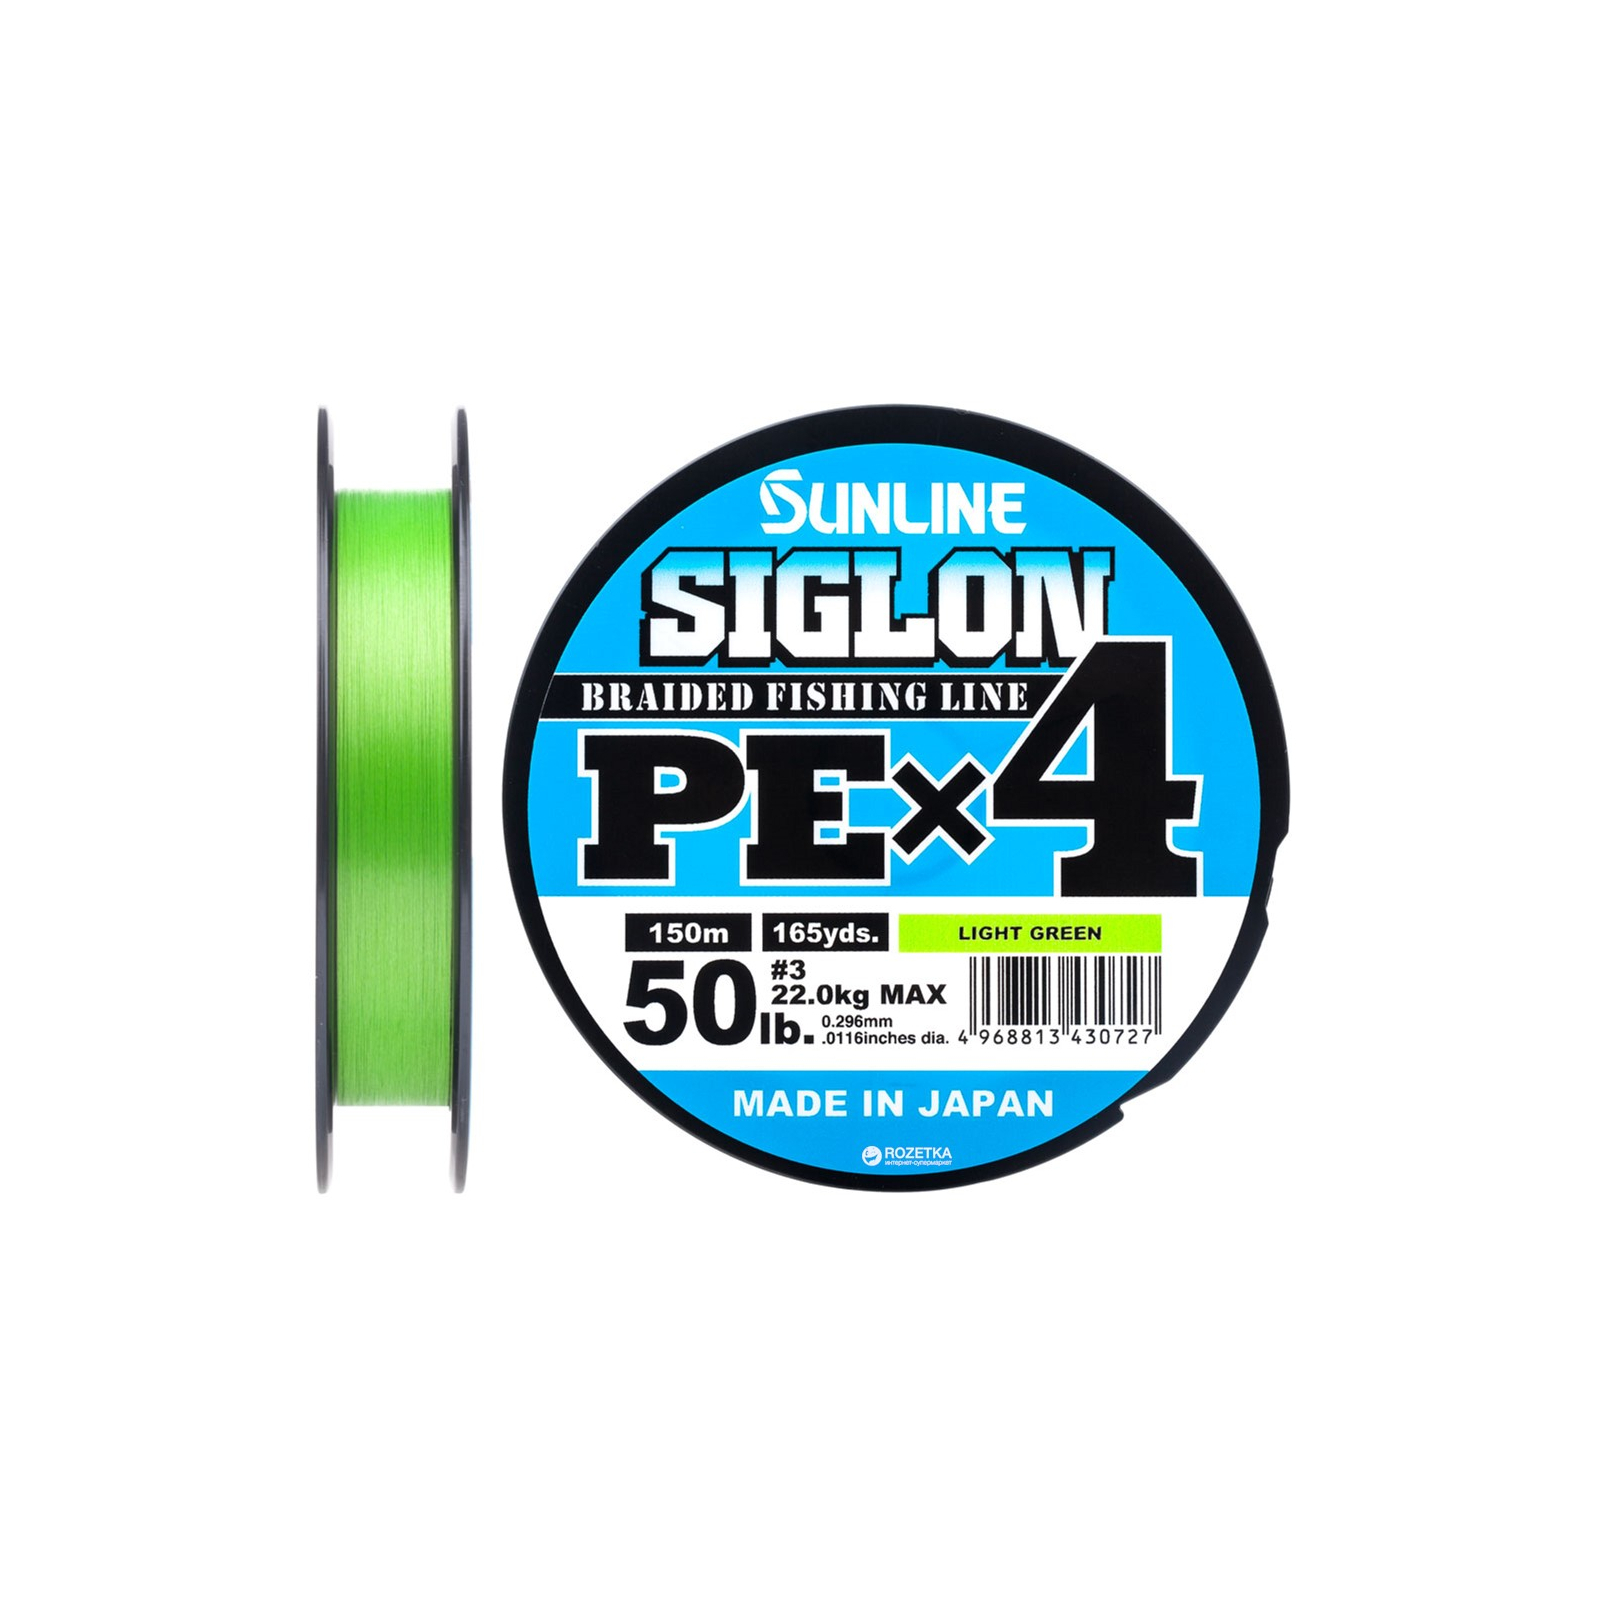 Шнур Sunline Siglon PE н4 150m 3.0/0.296mm 50lb/22.0kg Light Green (1658.09.12)